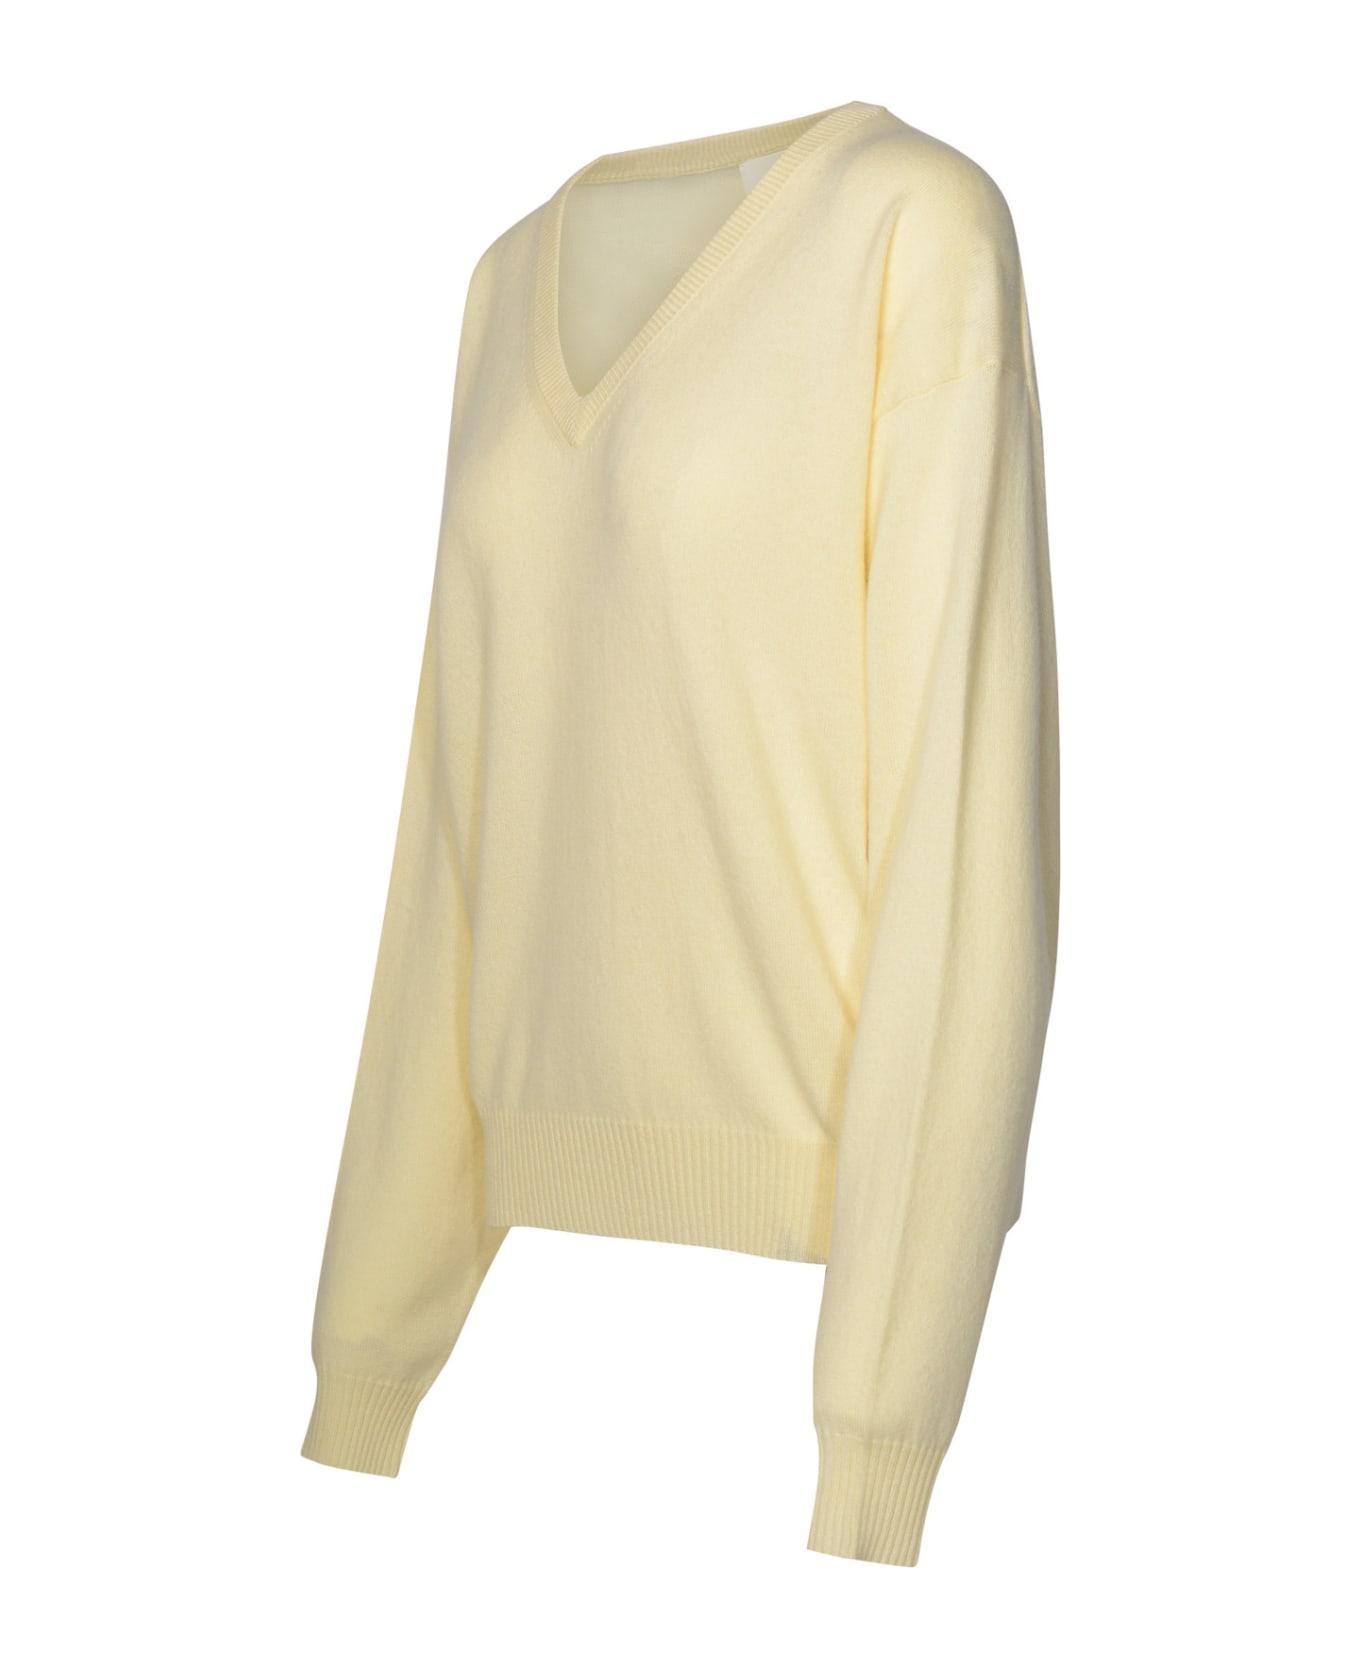 SportMax Ivory Wool Blend Sweater - Cream